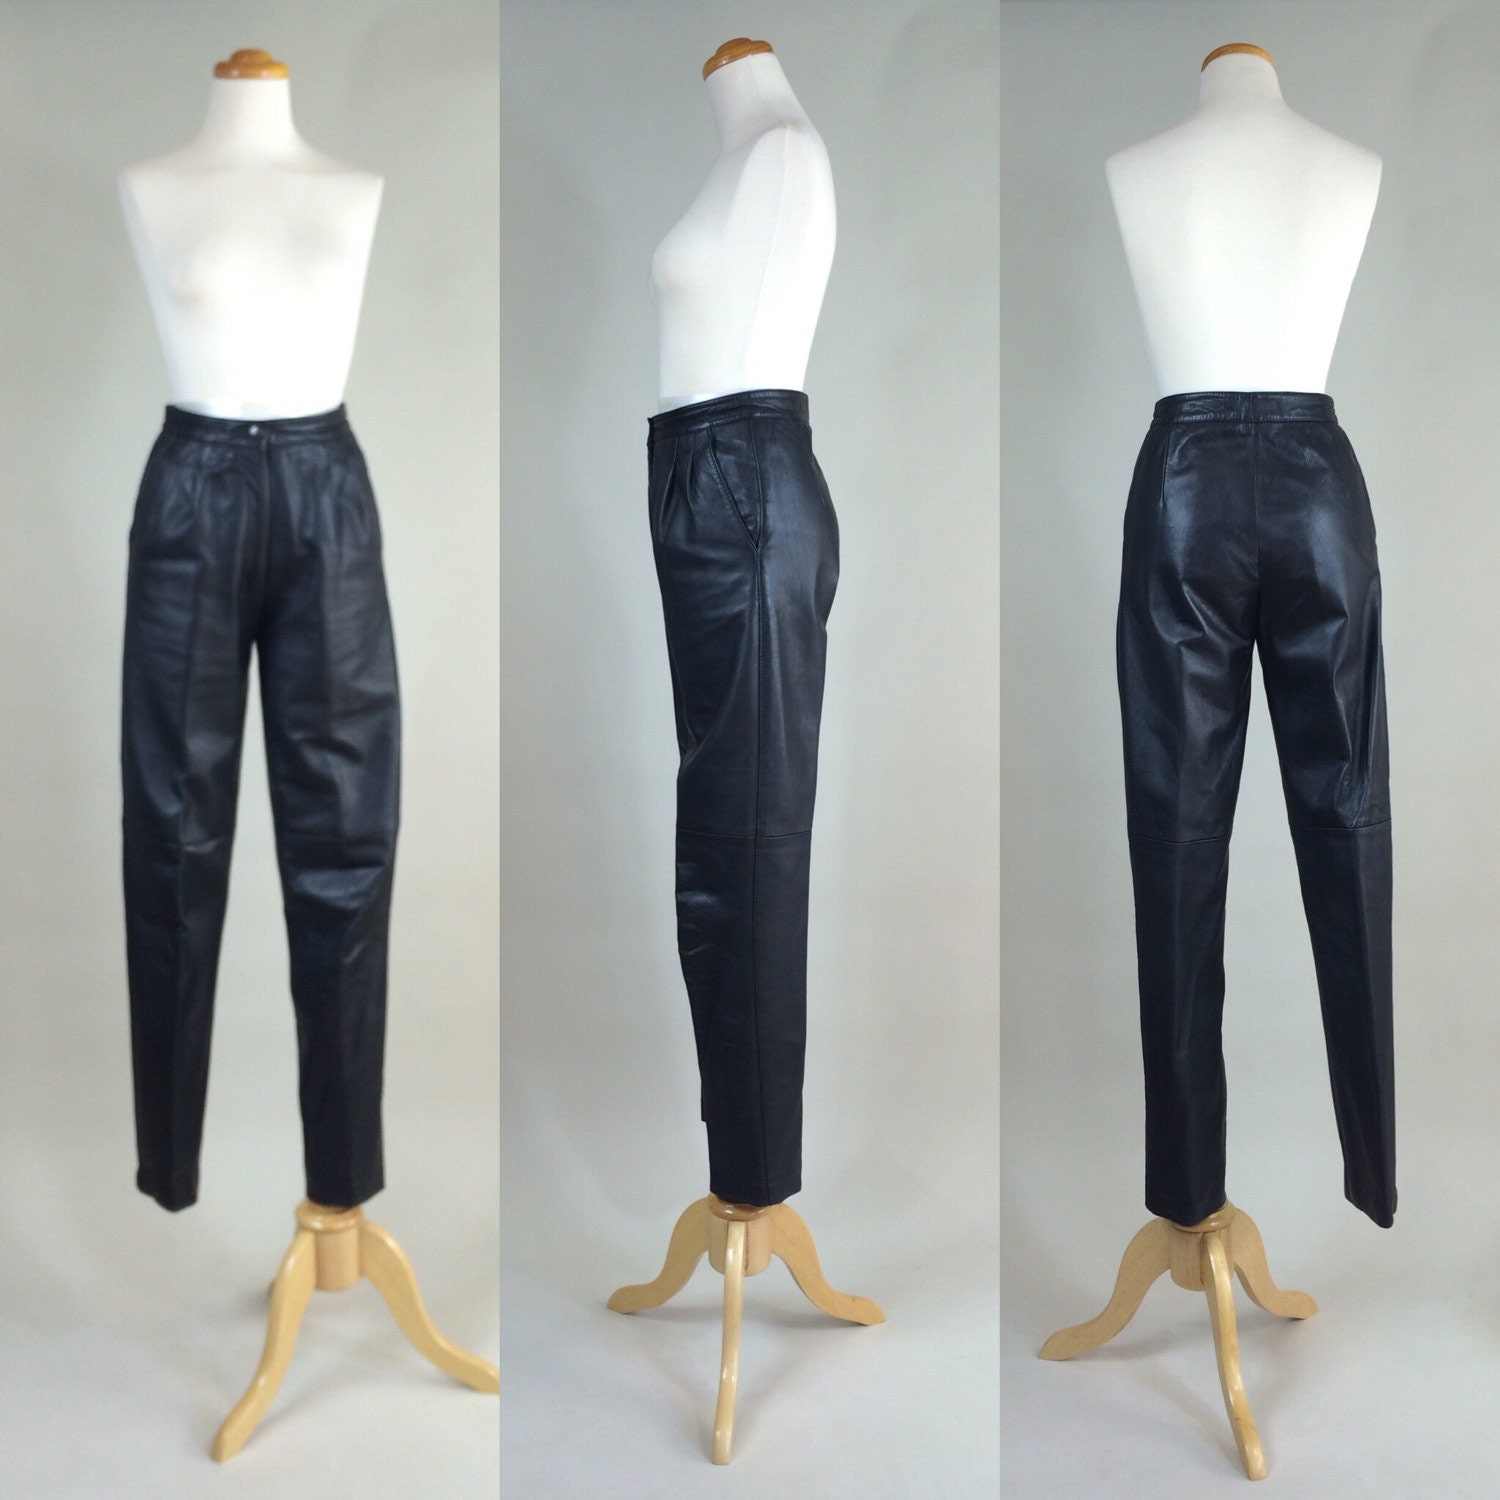 80s Black Leather Pants / Vintage 1980s Black Leather Pants